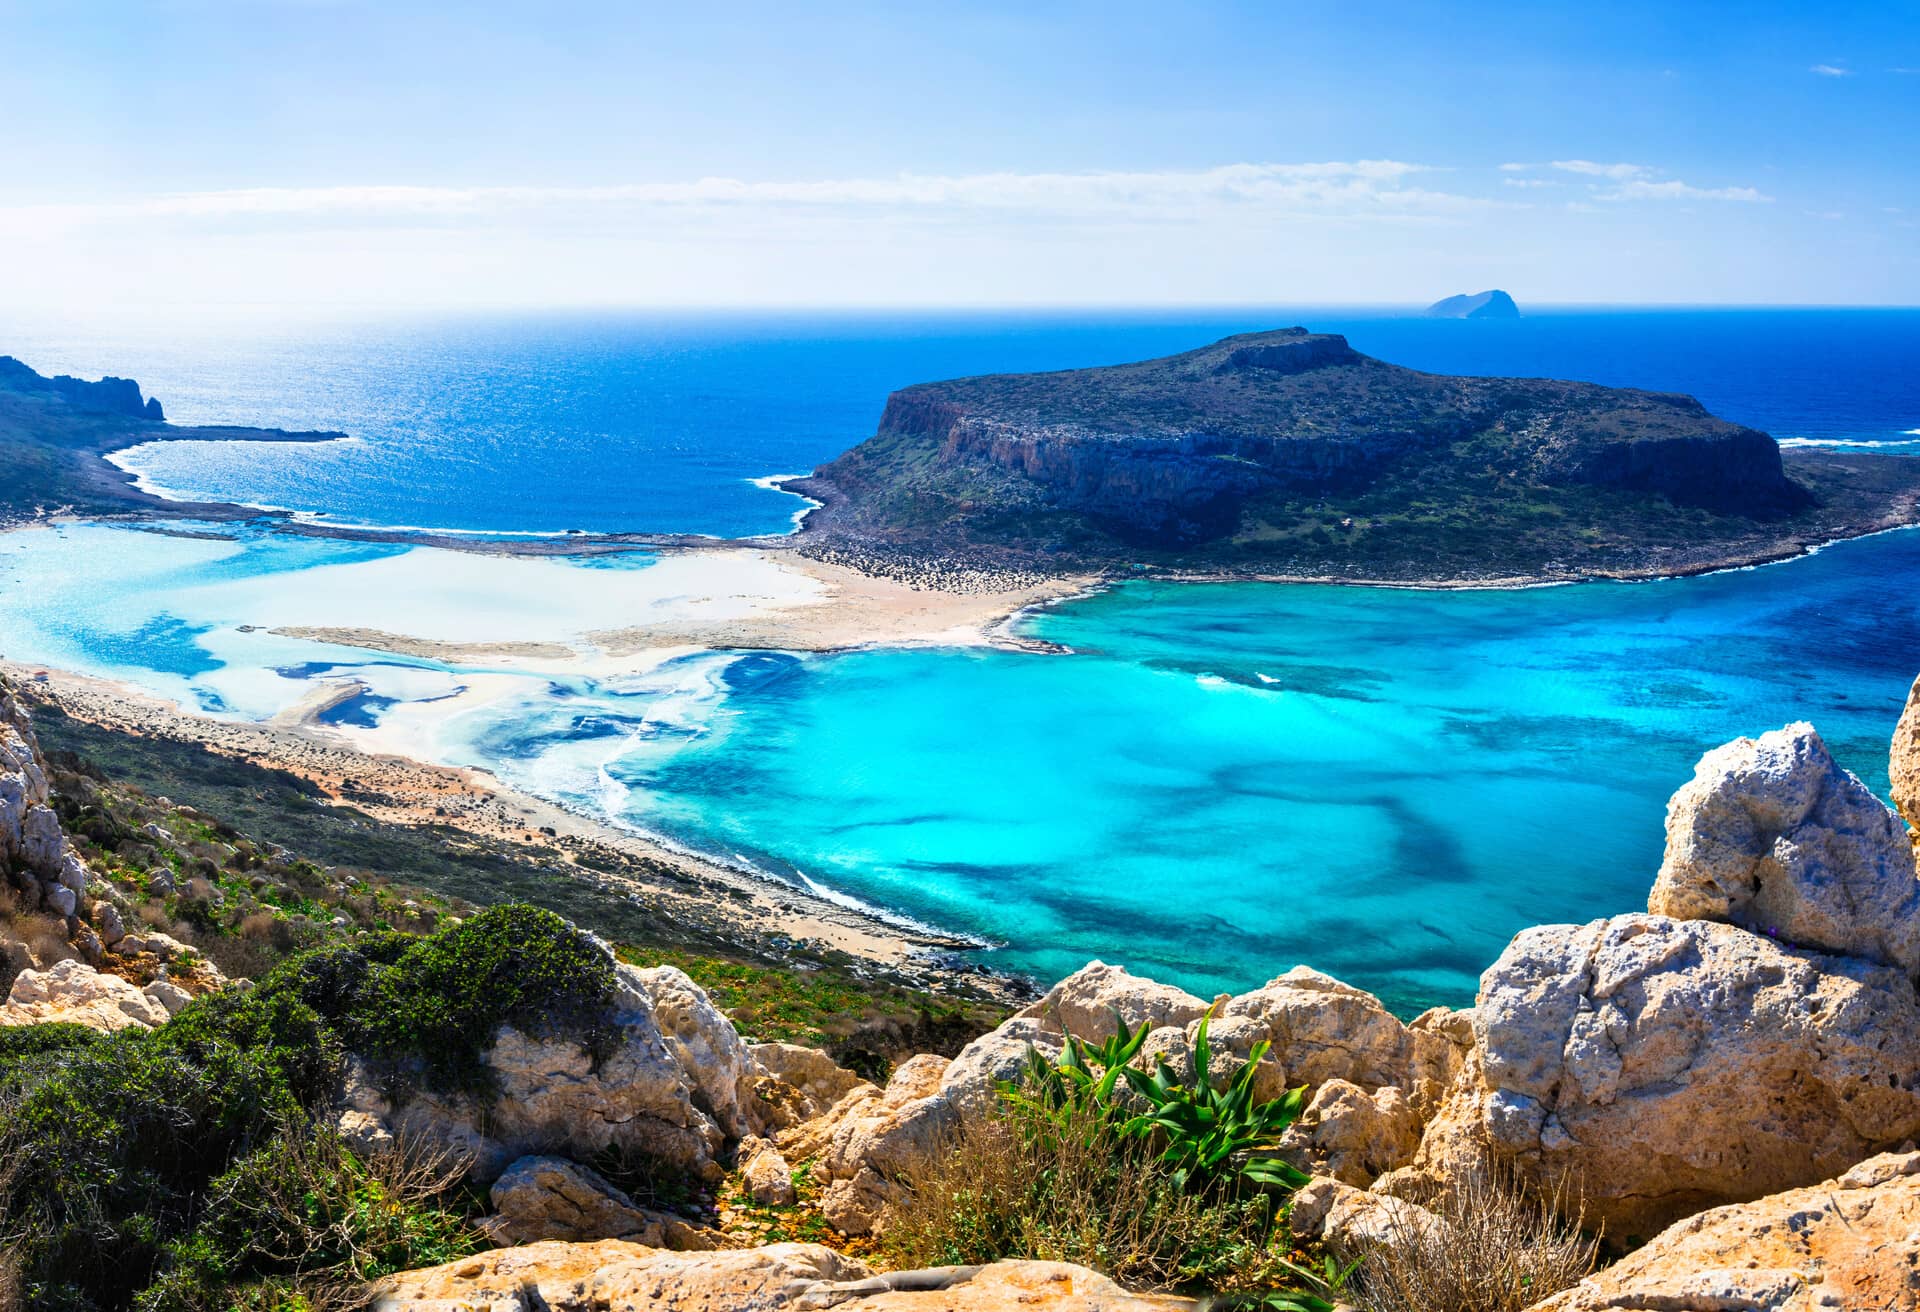 Yunanistan, Girit'ten nefes kesen bir manzara.